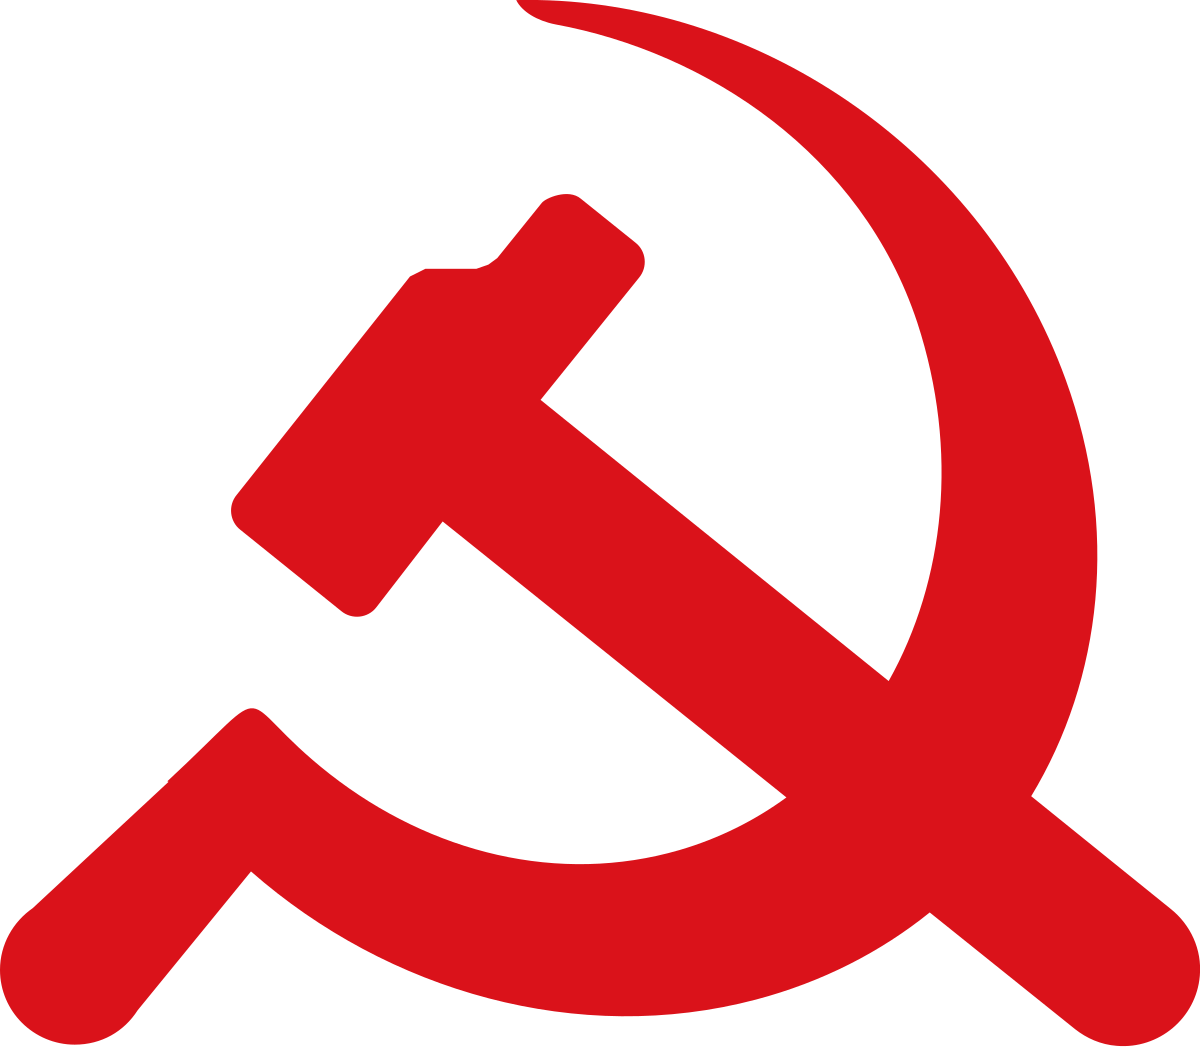 democracy clipart communism